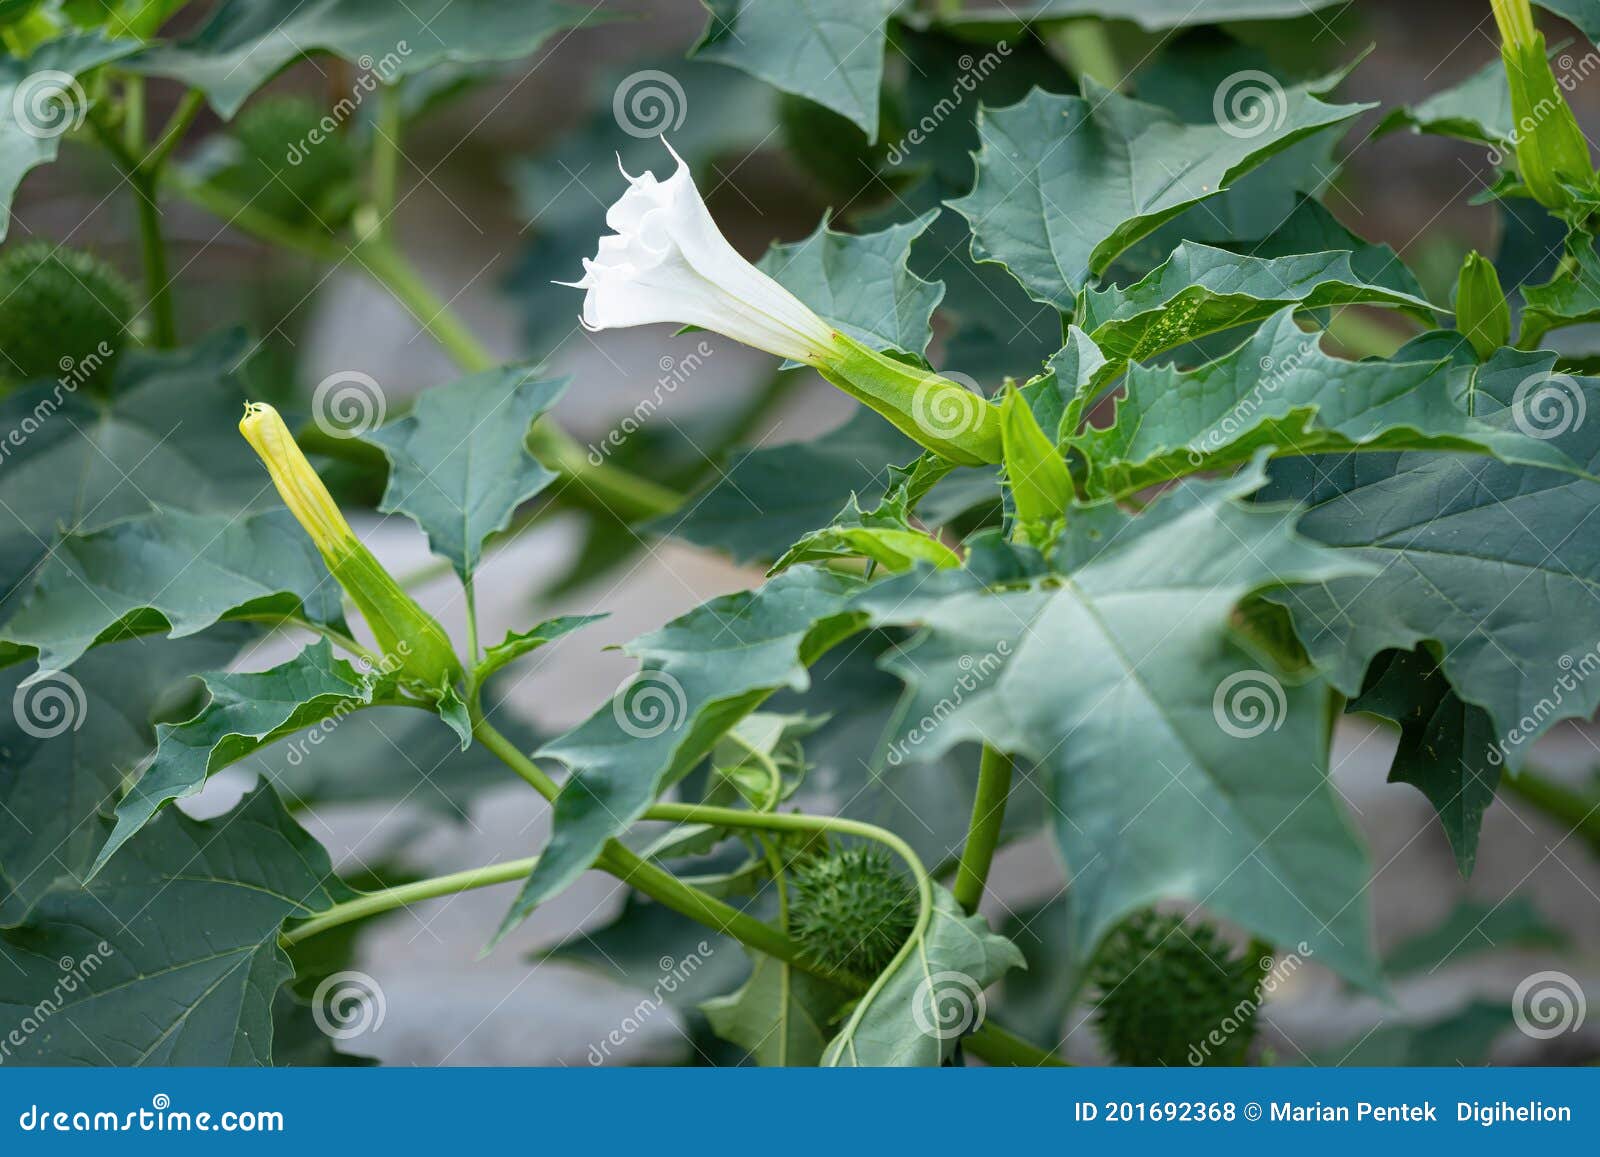 hallucinogen plant devil`s trumpet datura stramonium, also called jimsonweed